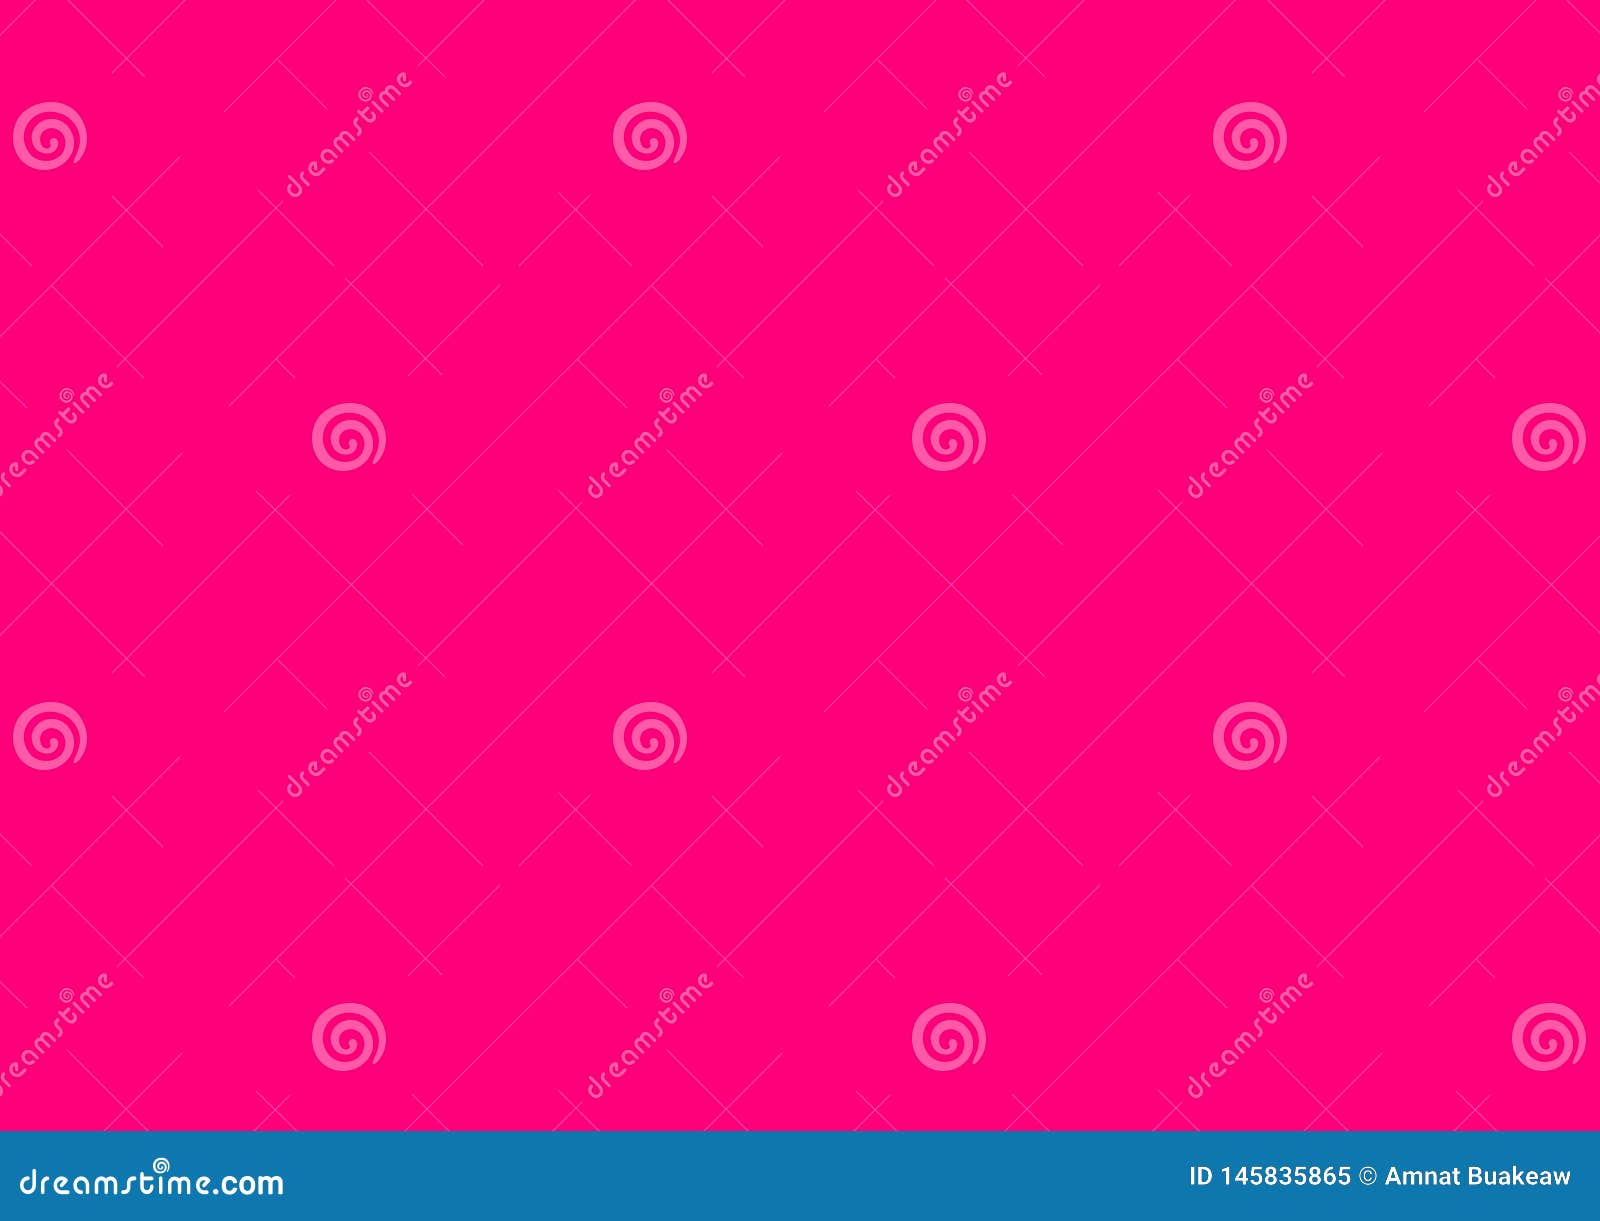 Magenta Pink Flat Rectangle For Background Pastel Pink Color Light Pink Plain Colors Top View Stock Vector Illustration Of Card Celebration